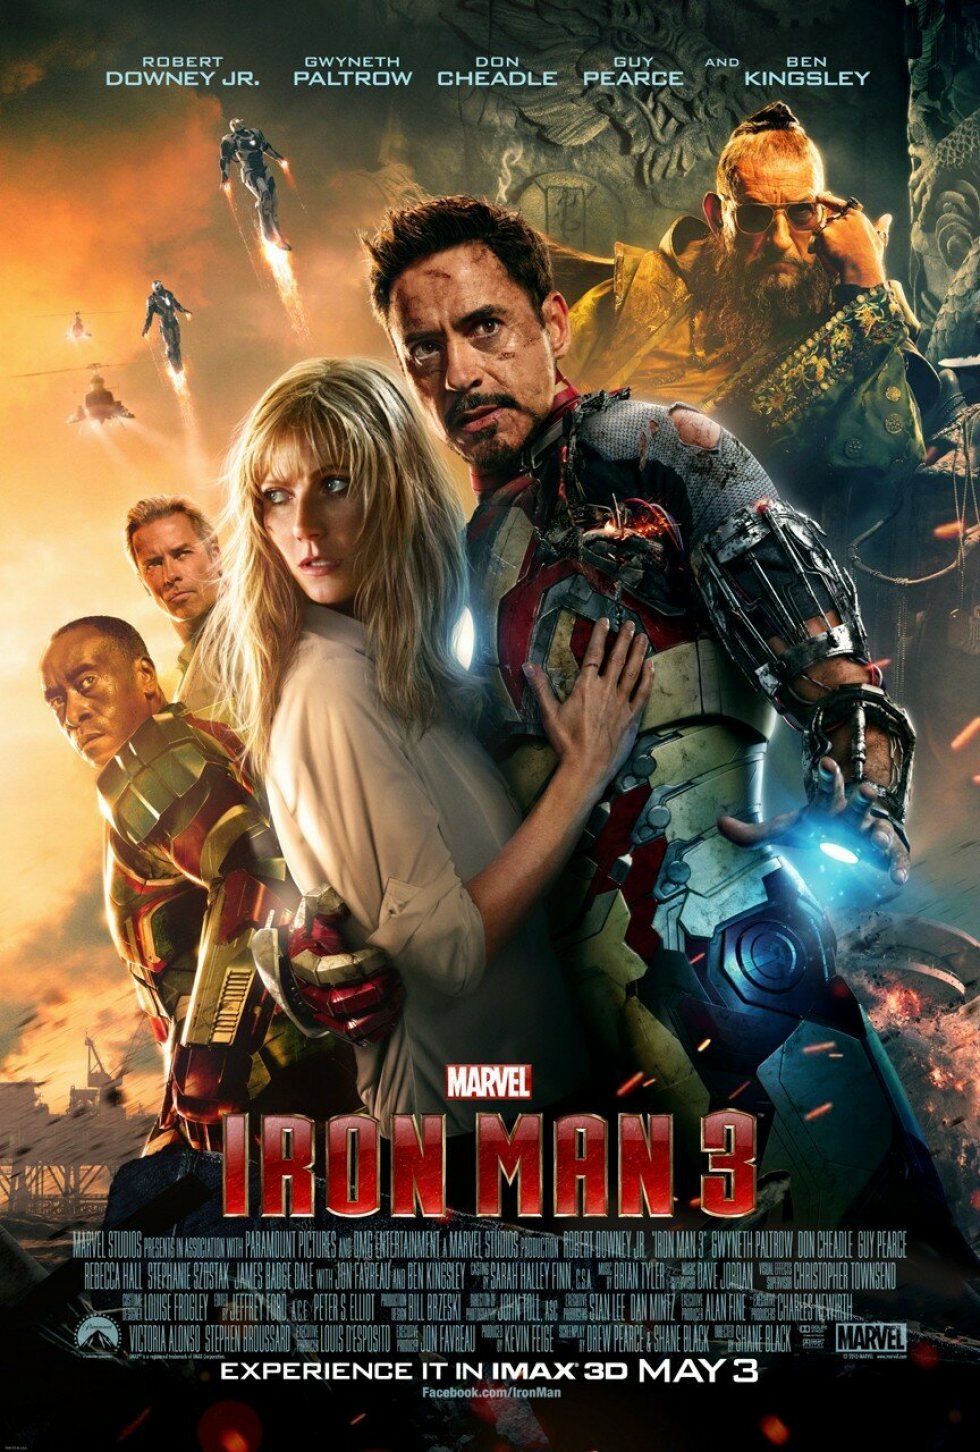 Iron Man 3 - Marvel Studios - 71 timers film-maraton: I denne rækkefølge skal du se Marvel filmene